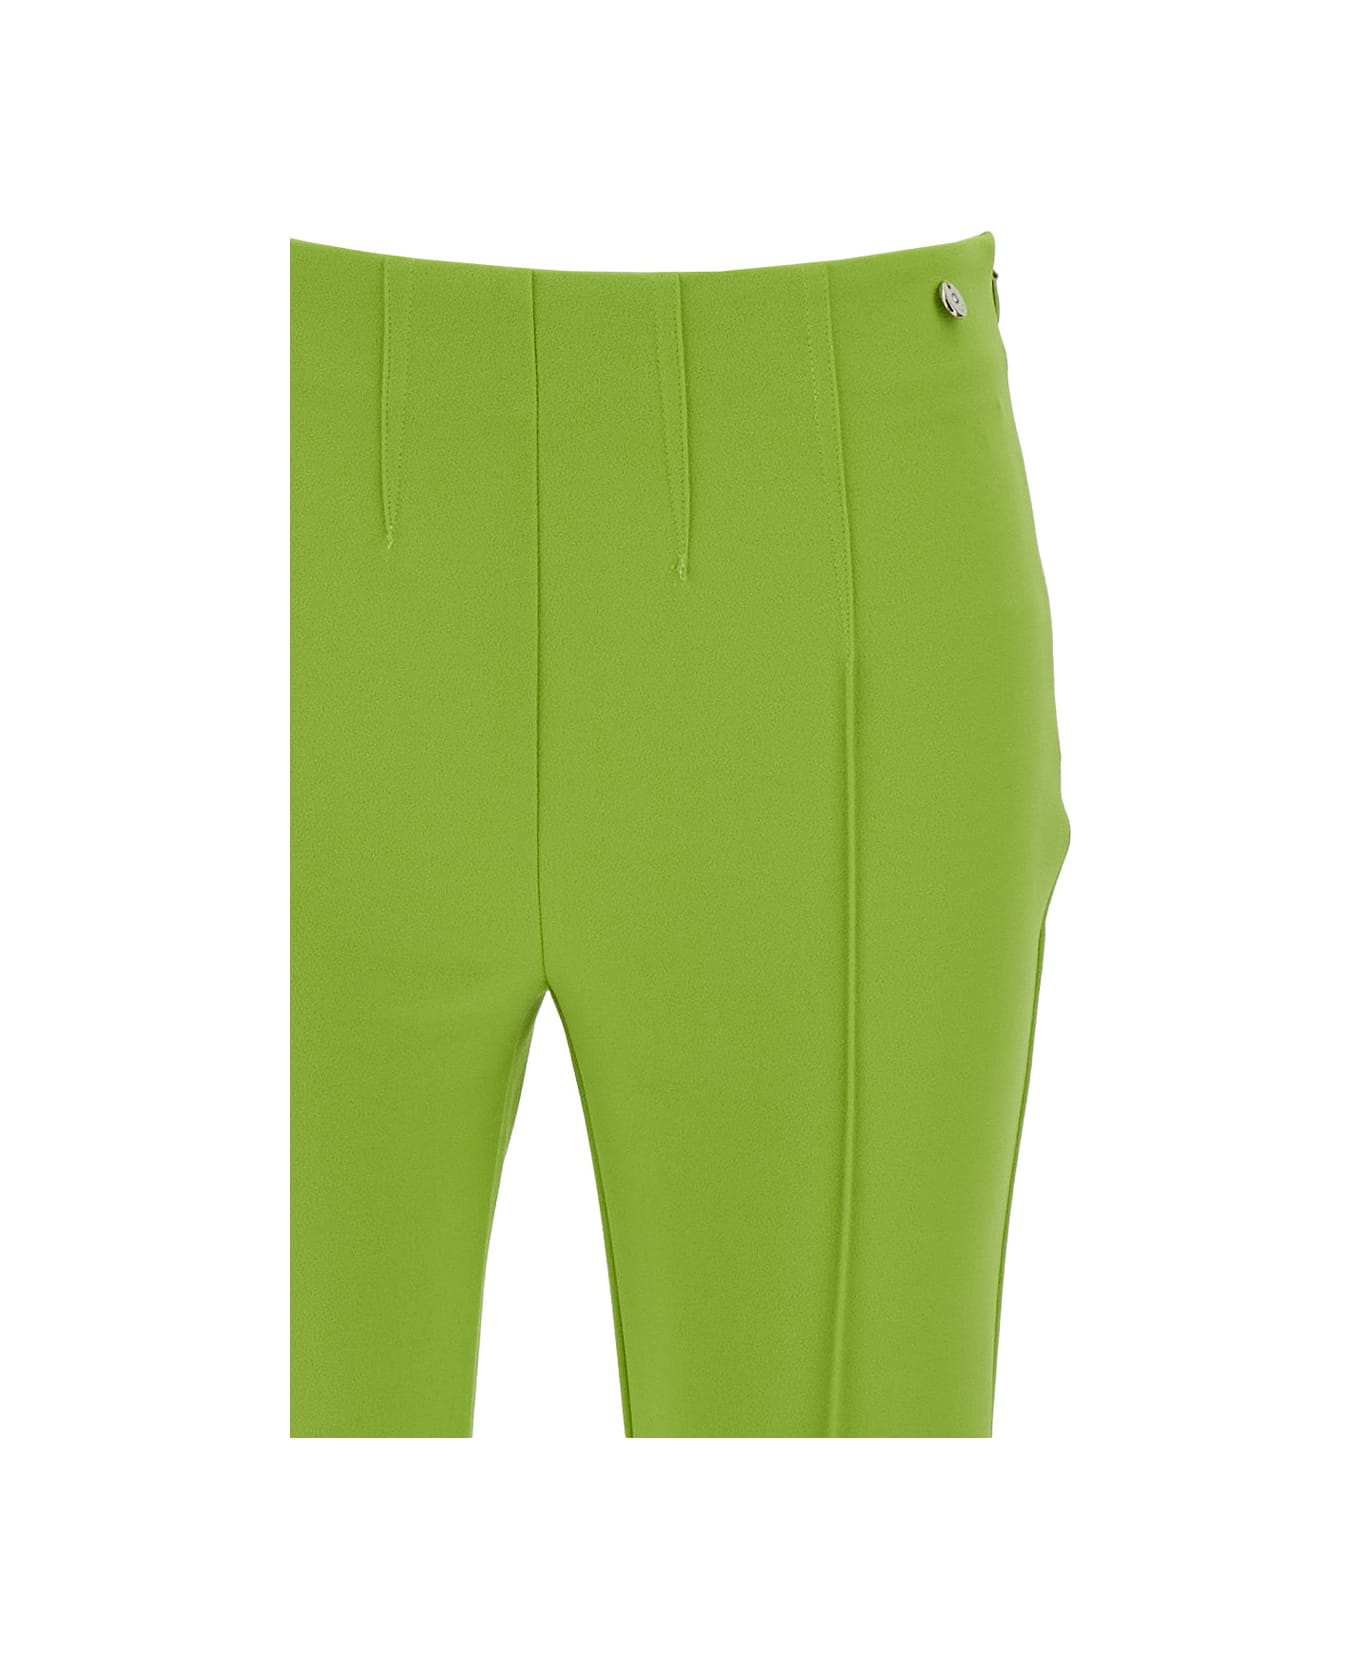 Liu-Jo Tailored High Waisted Green Pants In Stretch Fabric Woman Liu-Jo - GREEN ボトムス